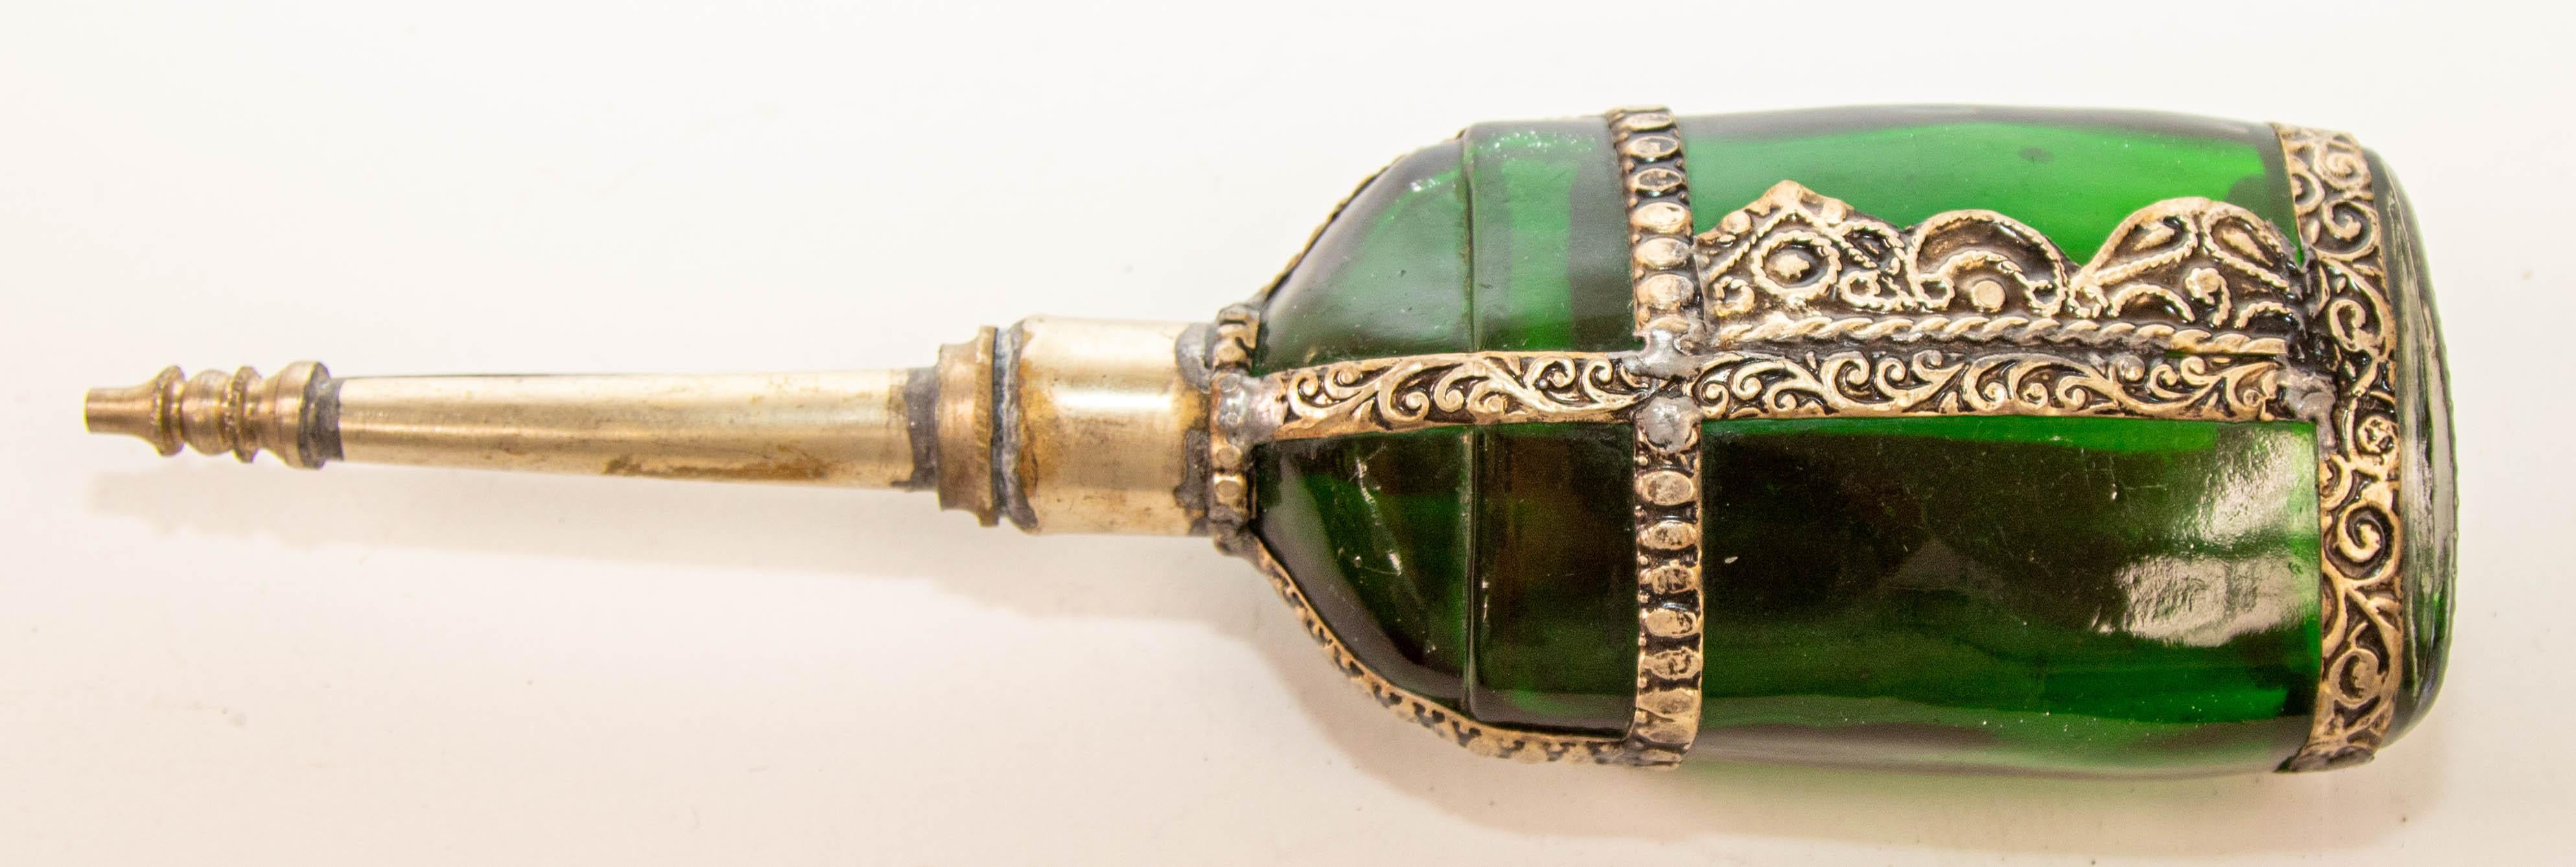 Moorish Green Glass Perfume Bottle Sprinkler with Embossed Metal Overlay For Sale 7